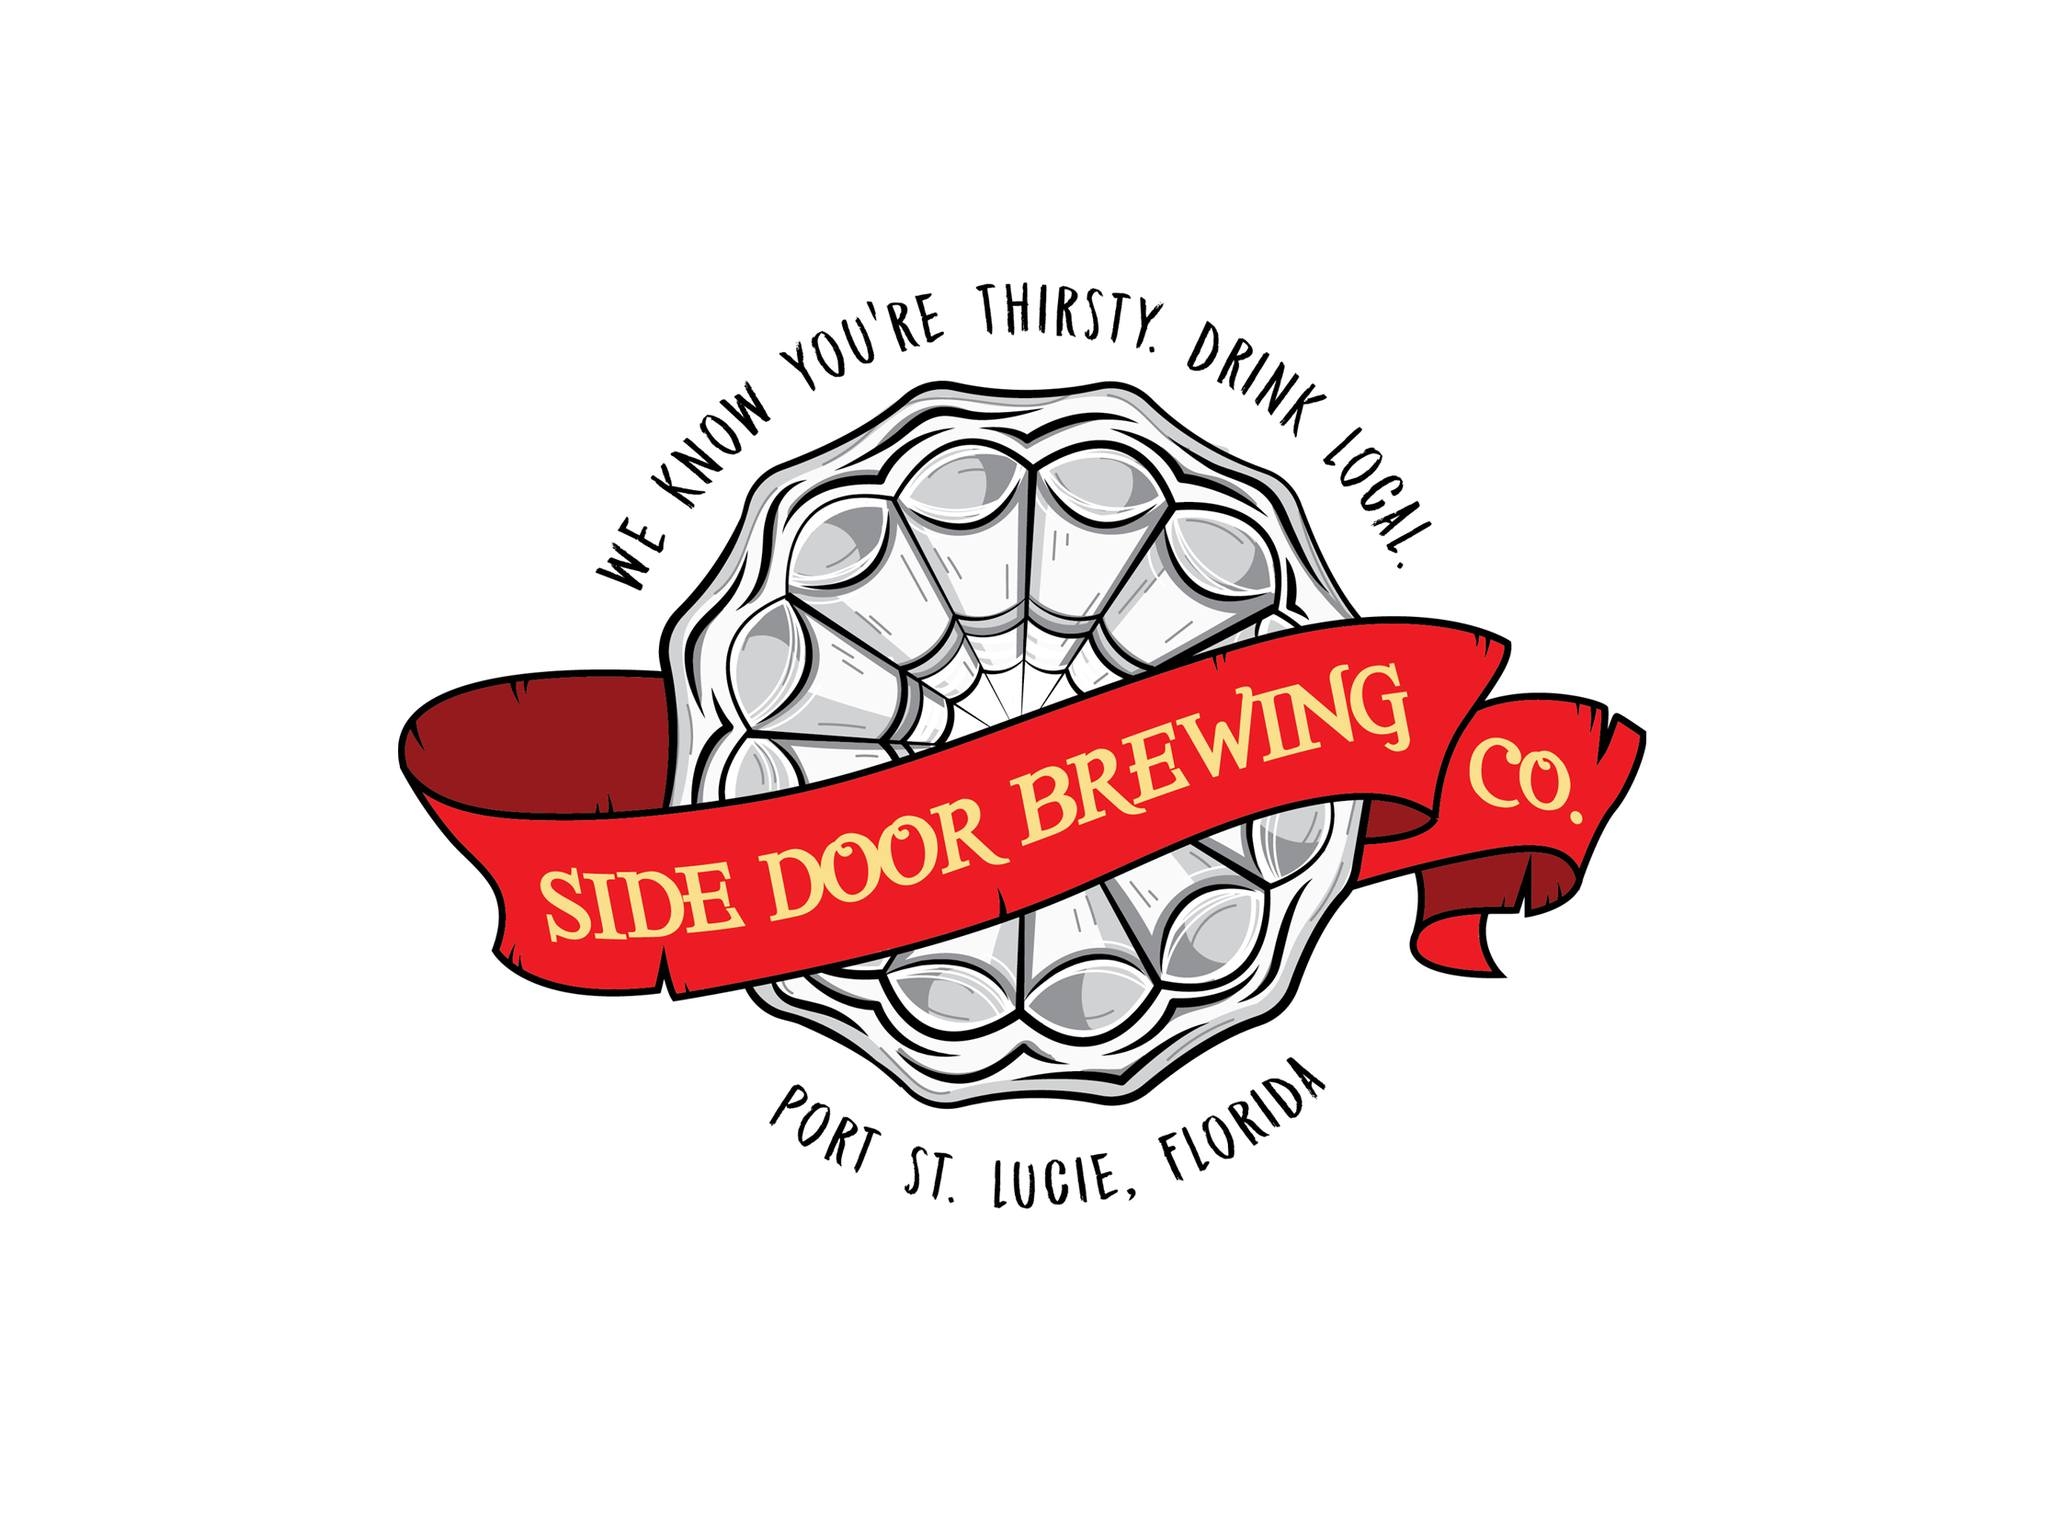 Sidedoor Brewery